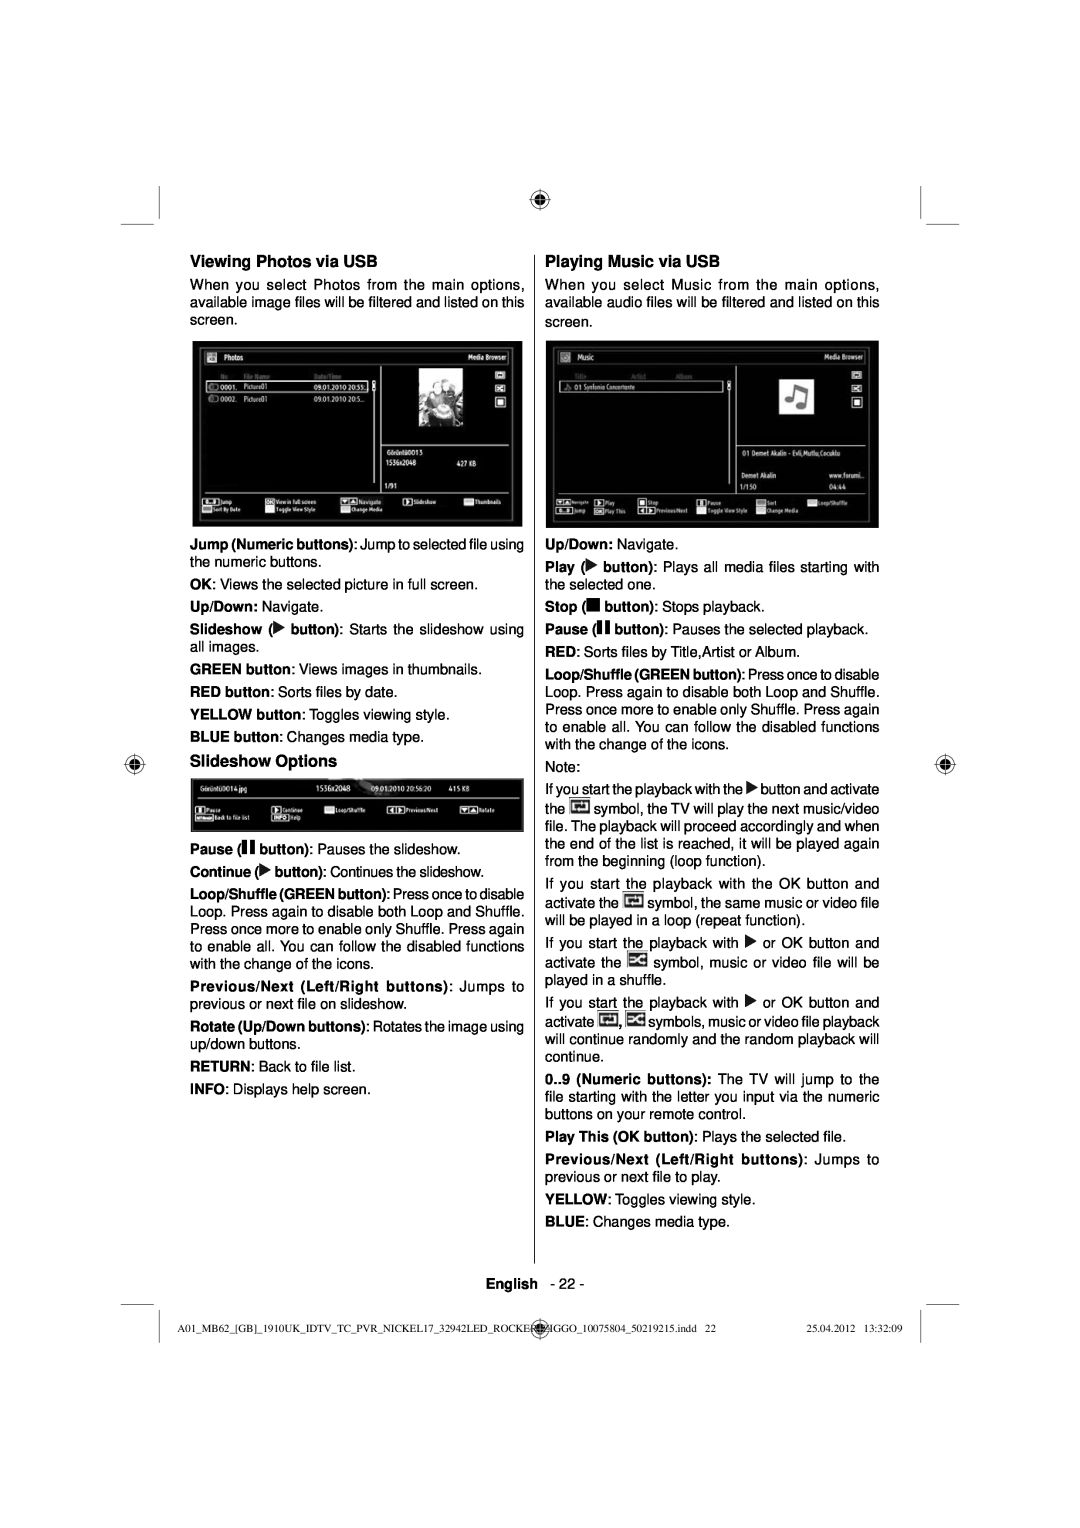 Sharp LC-32LE240E operation manual Viewing Photos via USB, Slideshow Options, Playing Music via USB 